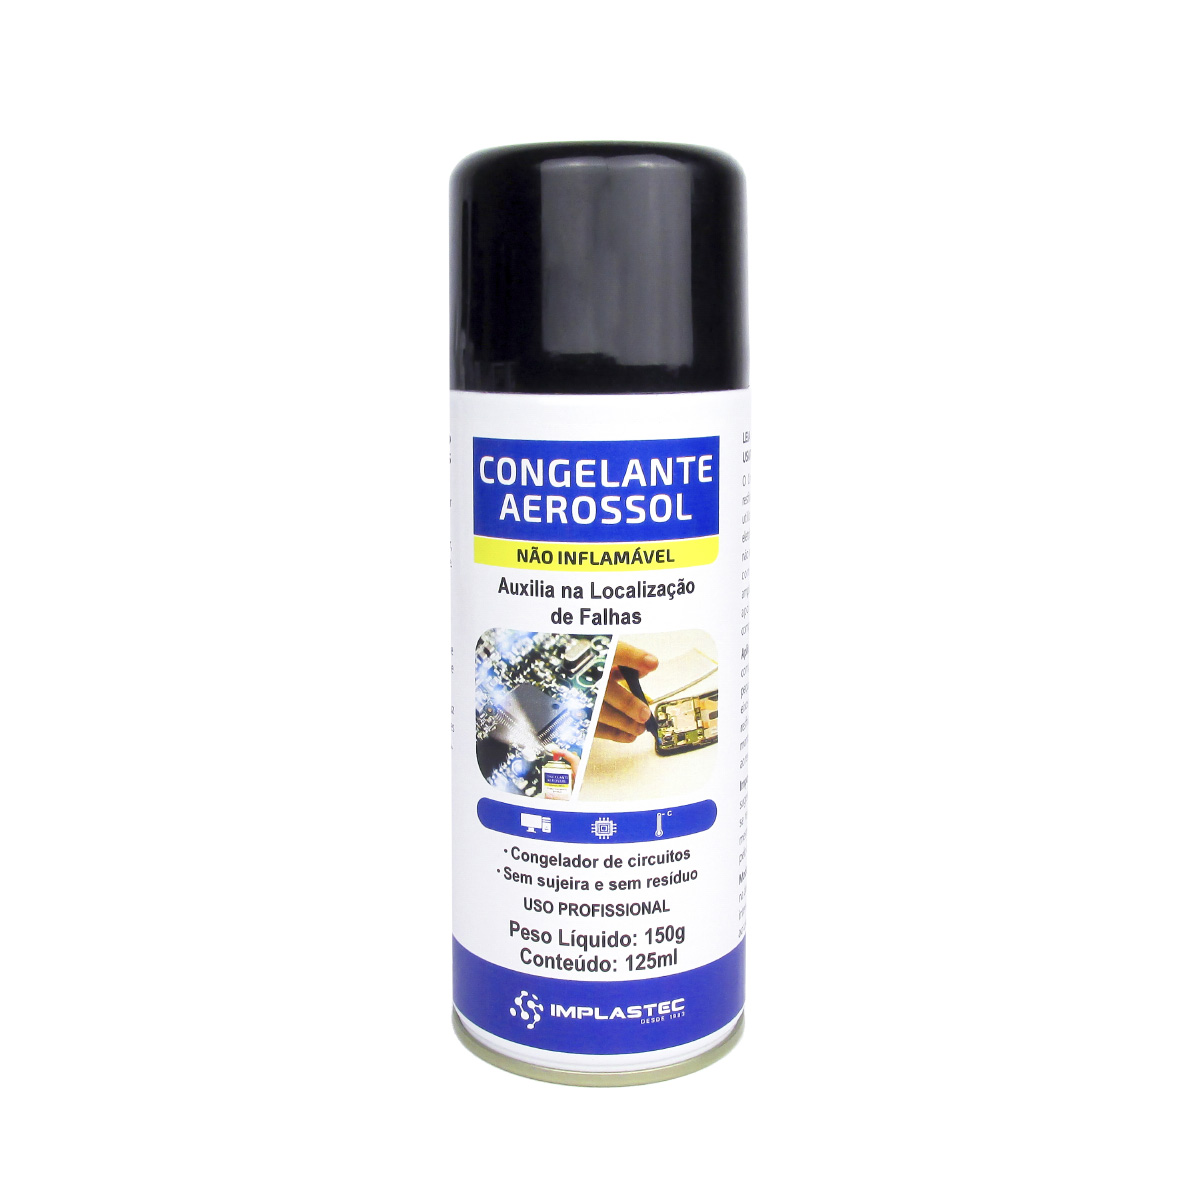 Spray Congelante Implastec - 150G